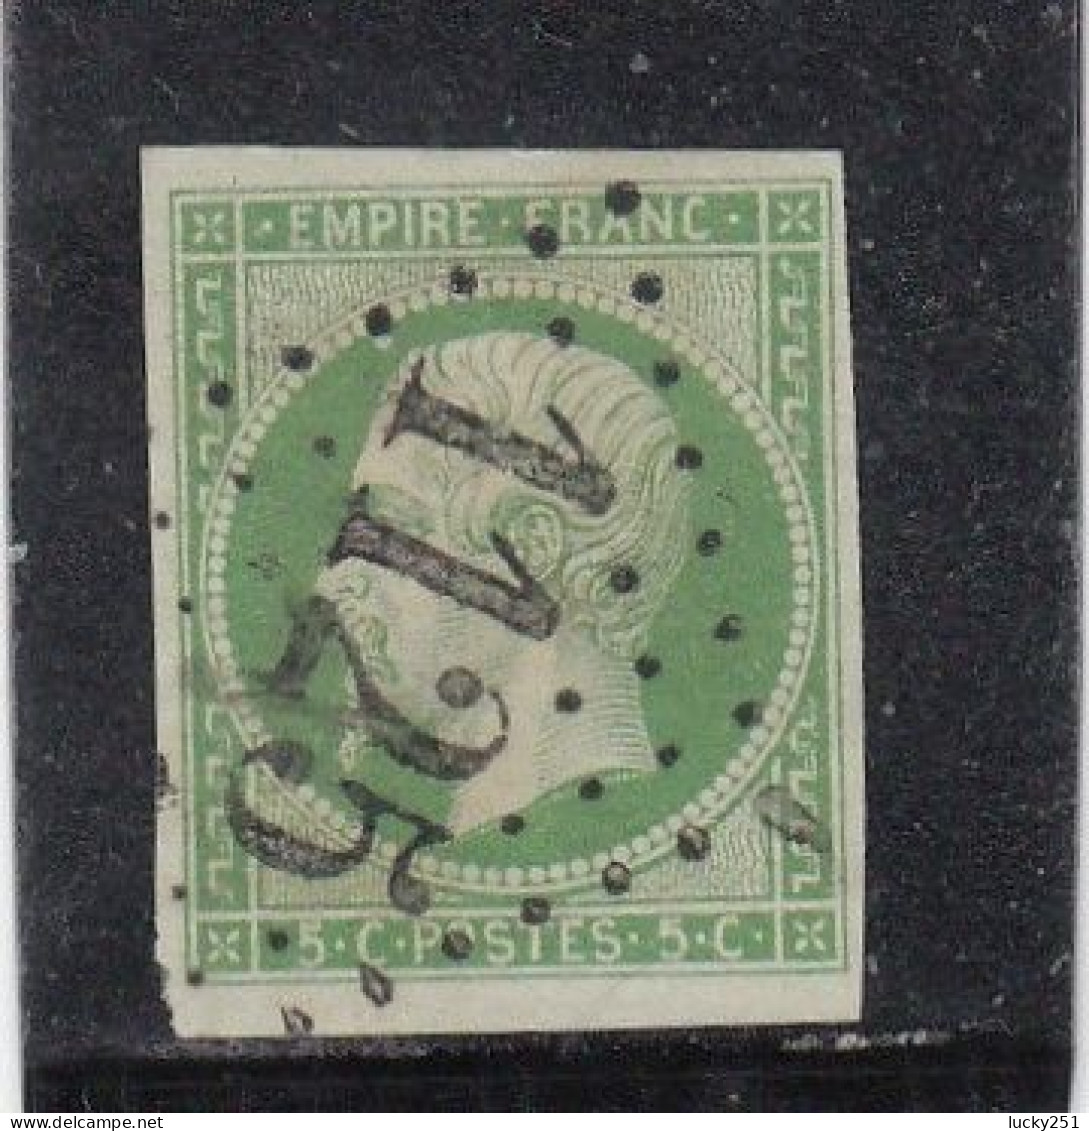 France - Année 1853-62 - N°YT N° 12 - 5c Vert - Empire - Oblitération GC - 1853-1860 Napoleon III